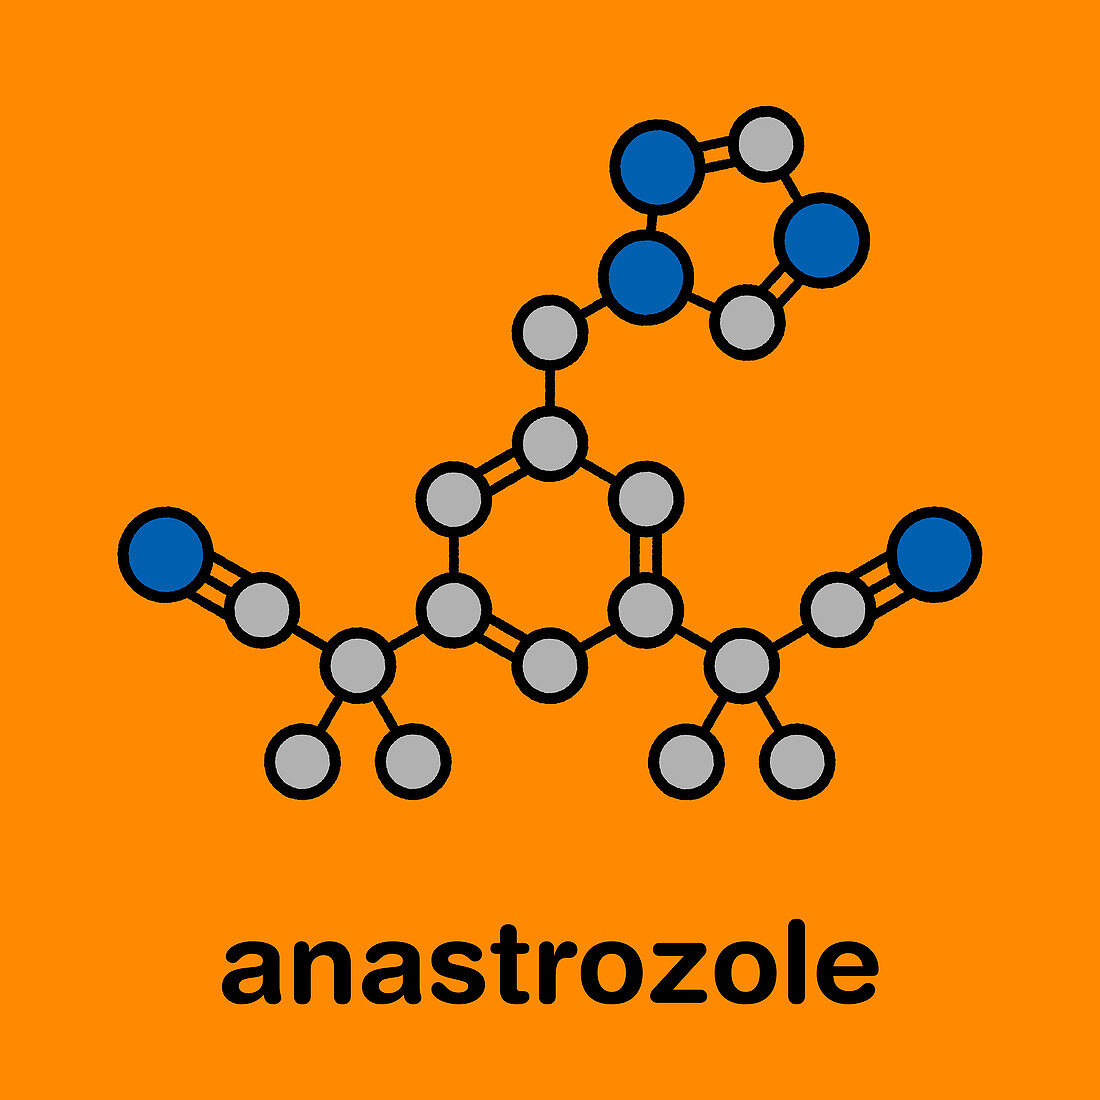 Anastrozole breast cancer drug, molecular model